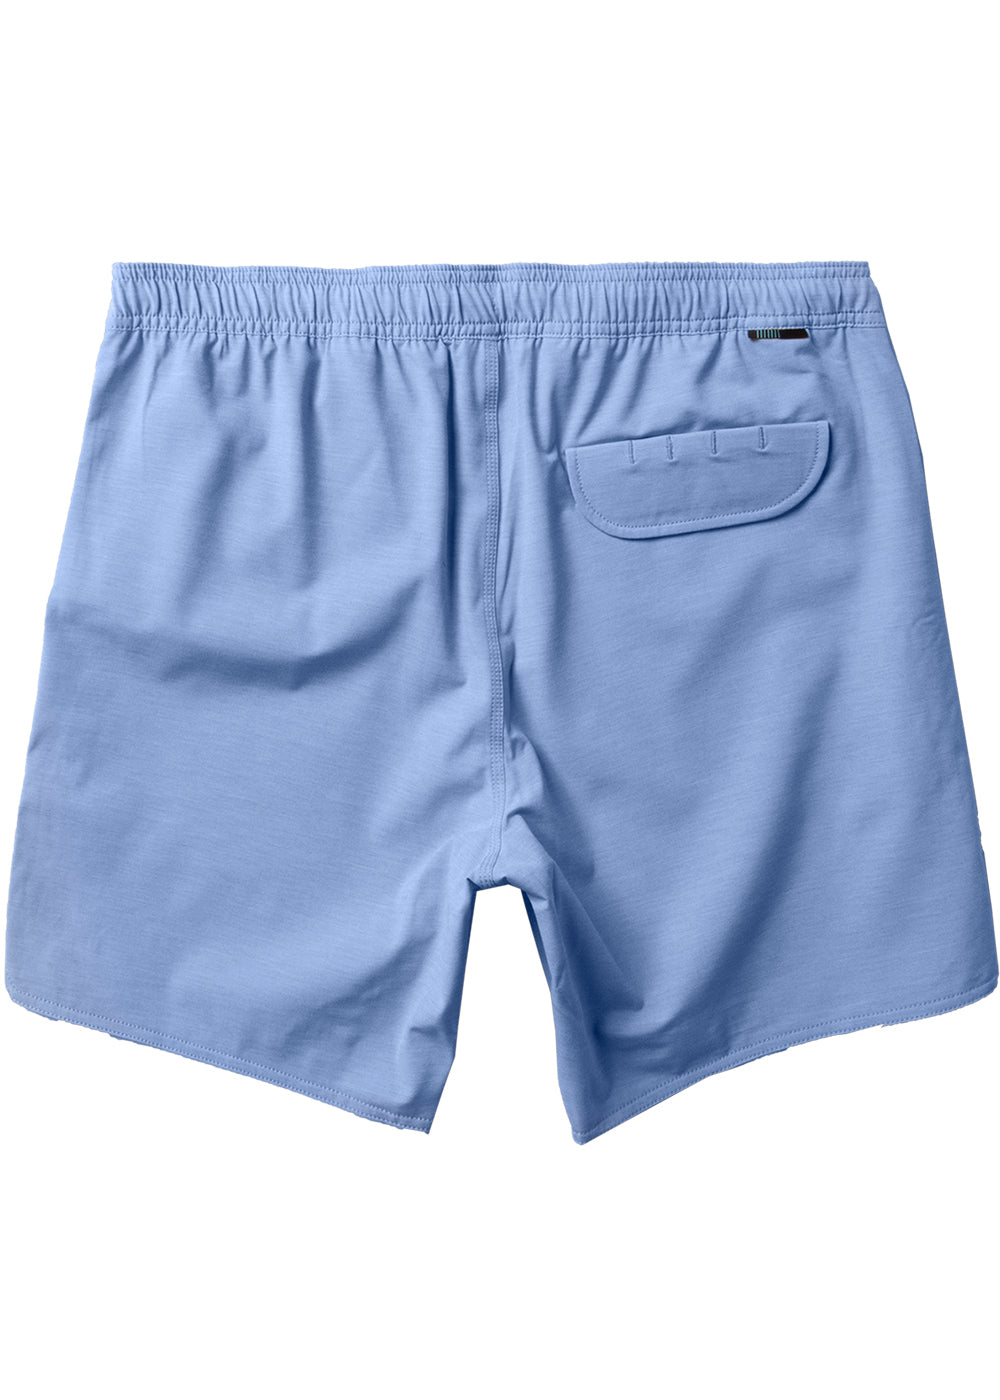 Vissla Men's harbor blue colored 16.5" elastic swimsuit. Back view.